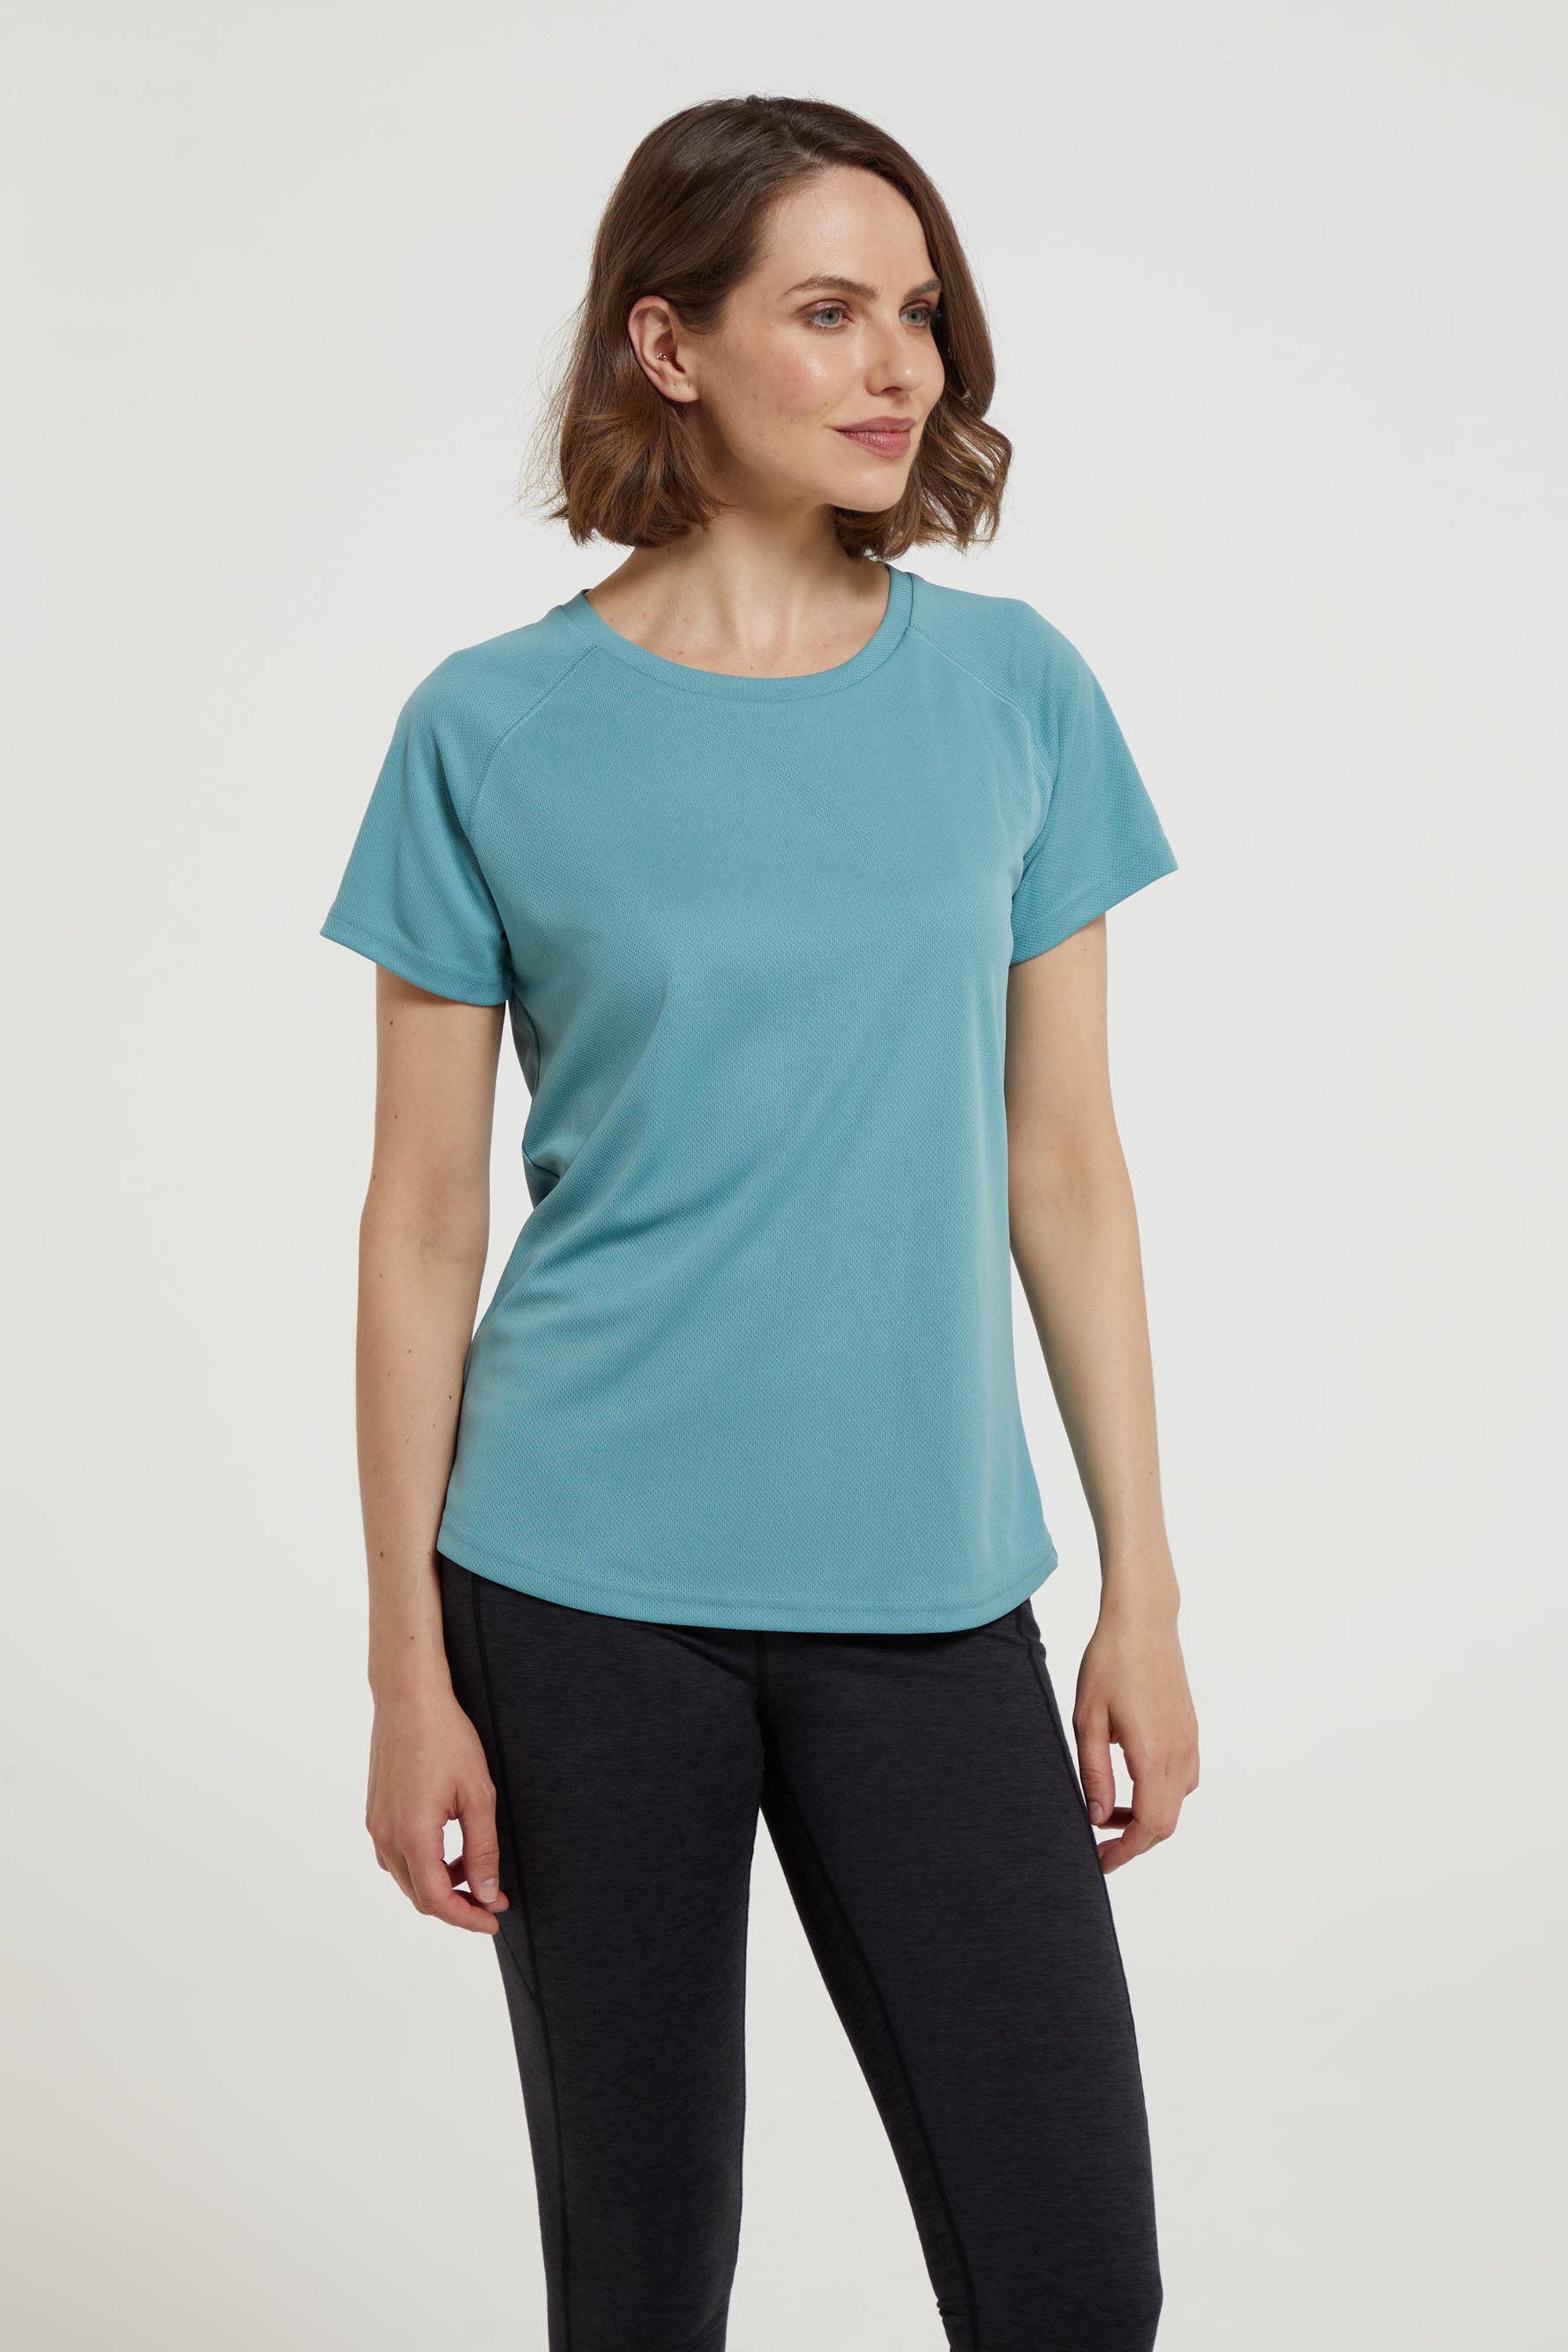 Endurance Damen T-Shirt | Mountain Warehouse DE